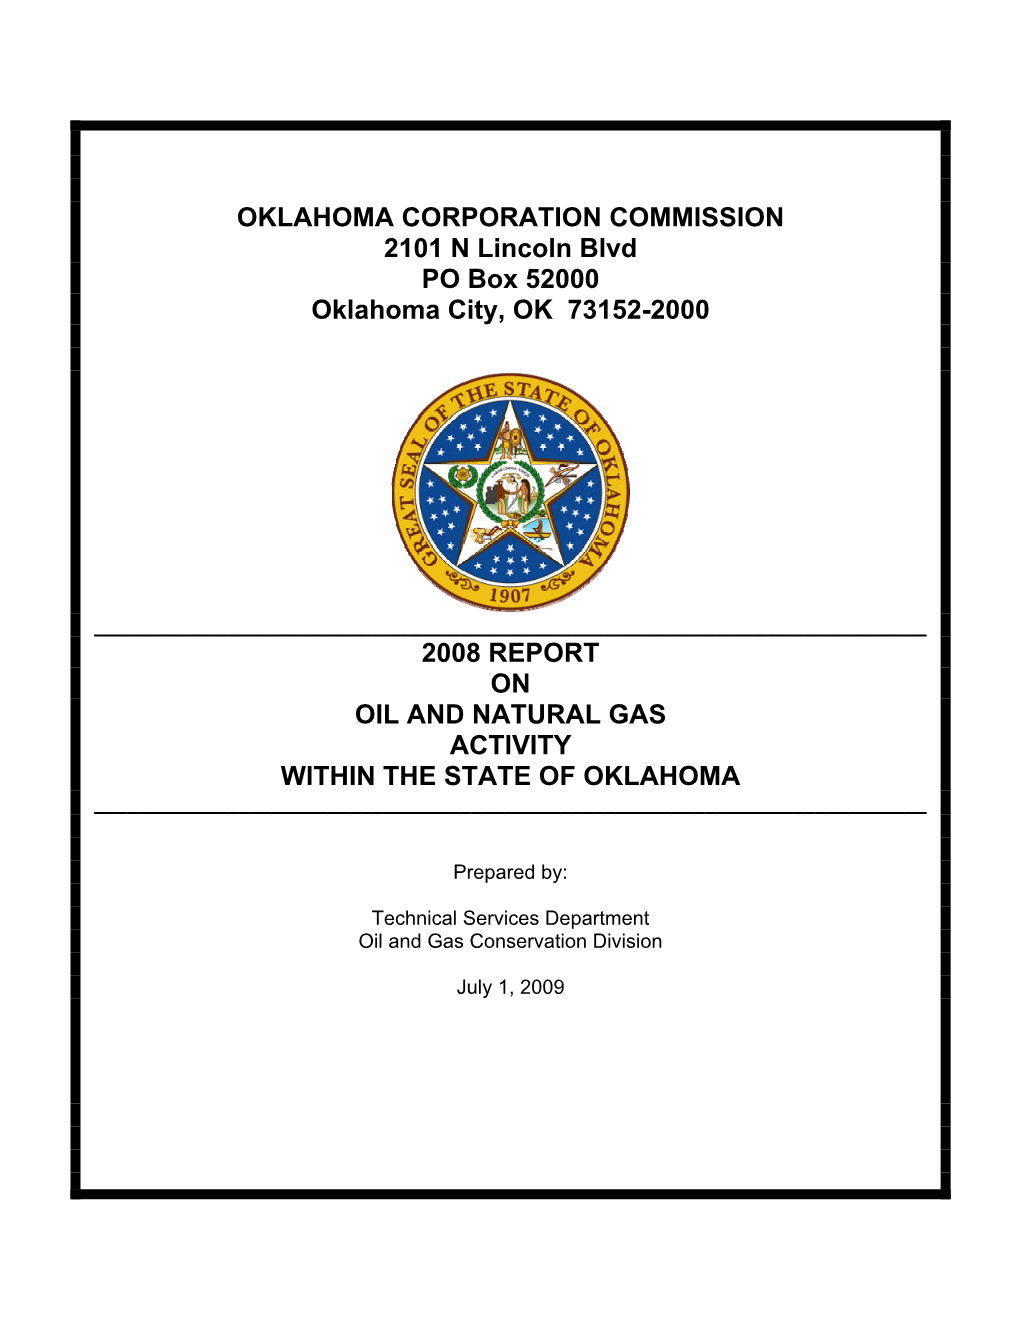 OKLAHOMA CORPORATION COMMISSION 2101 N Lincoln Blvd PO Box 52000 Oklahoma City, OK 73152-2000